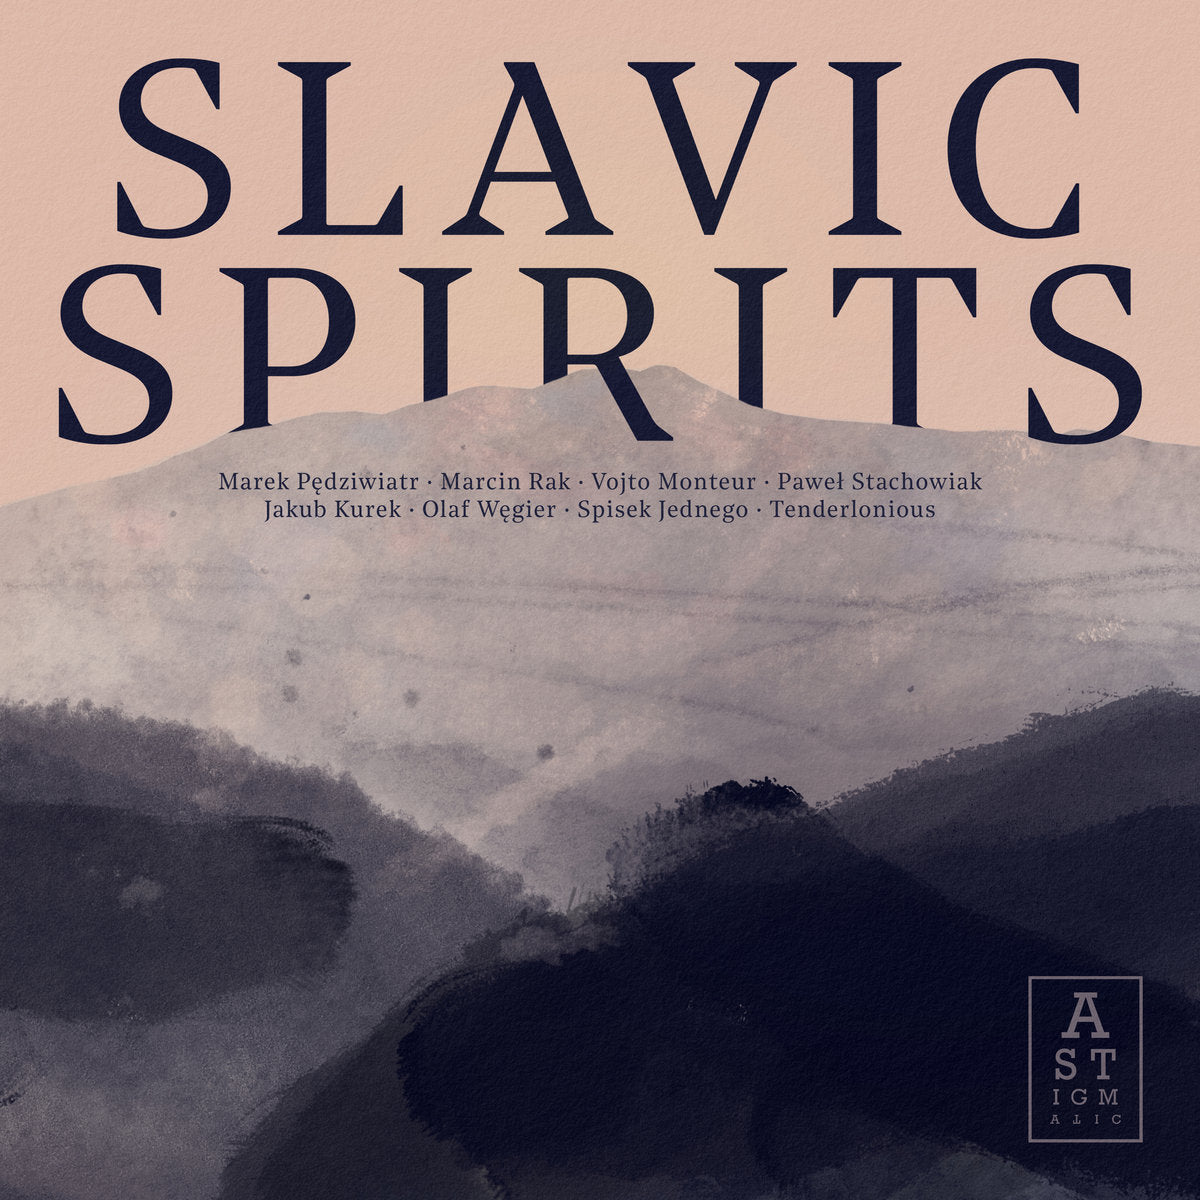 Slavic Spirits (CD+Book)